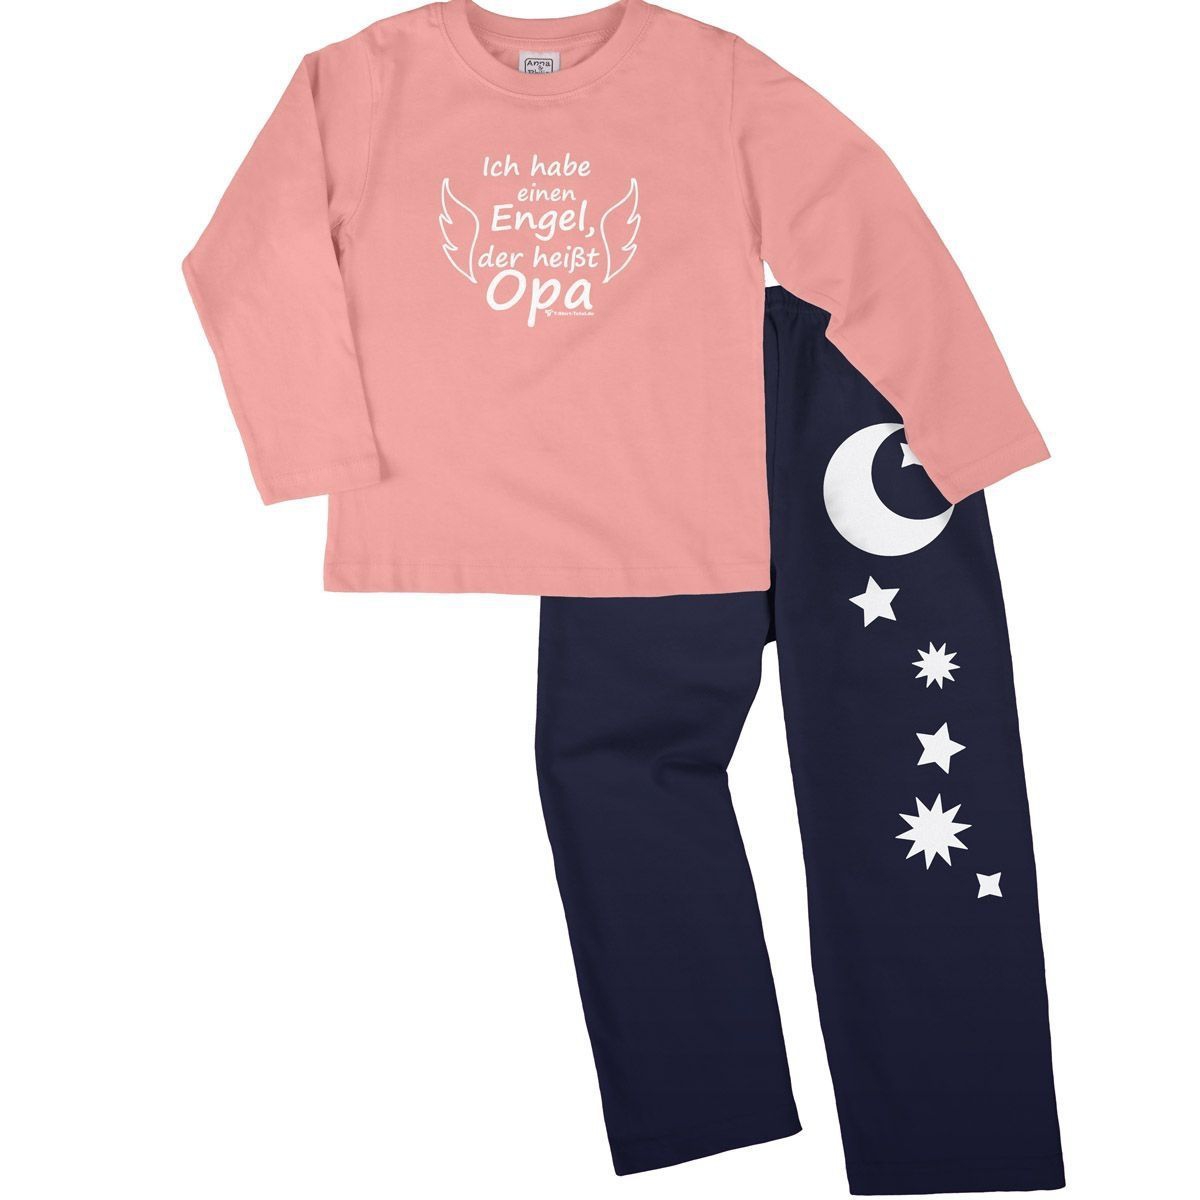 Engel Opa Pyjama Set rosa / navy 110 / 116